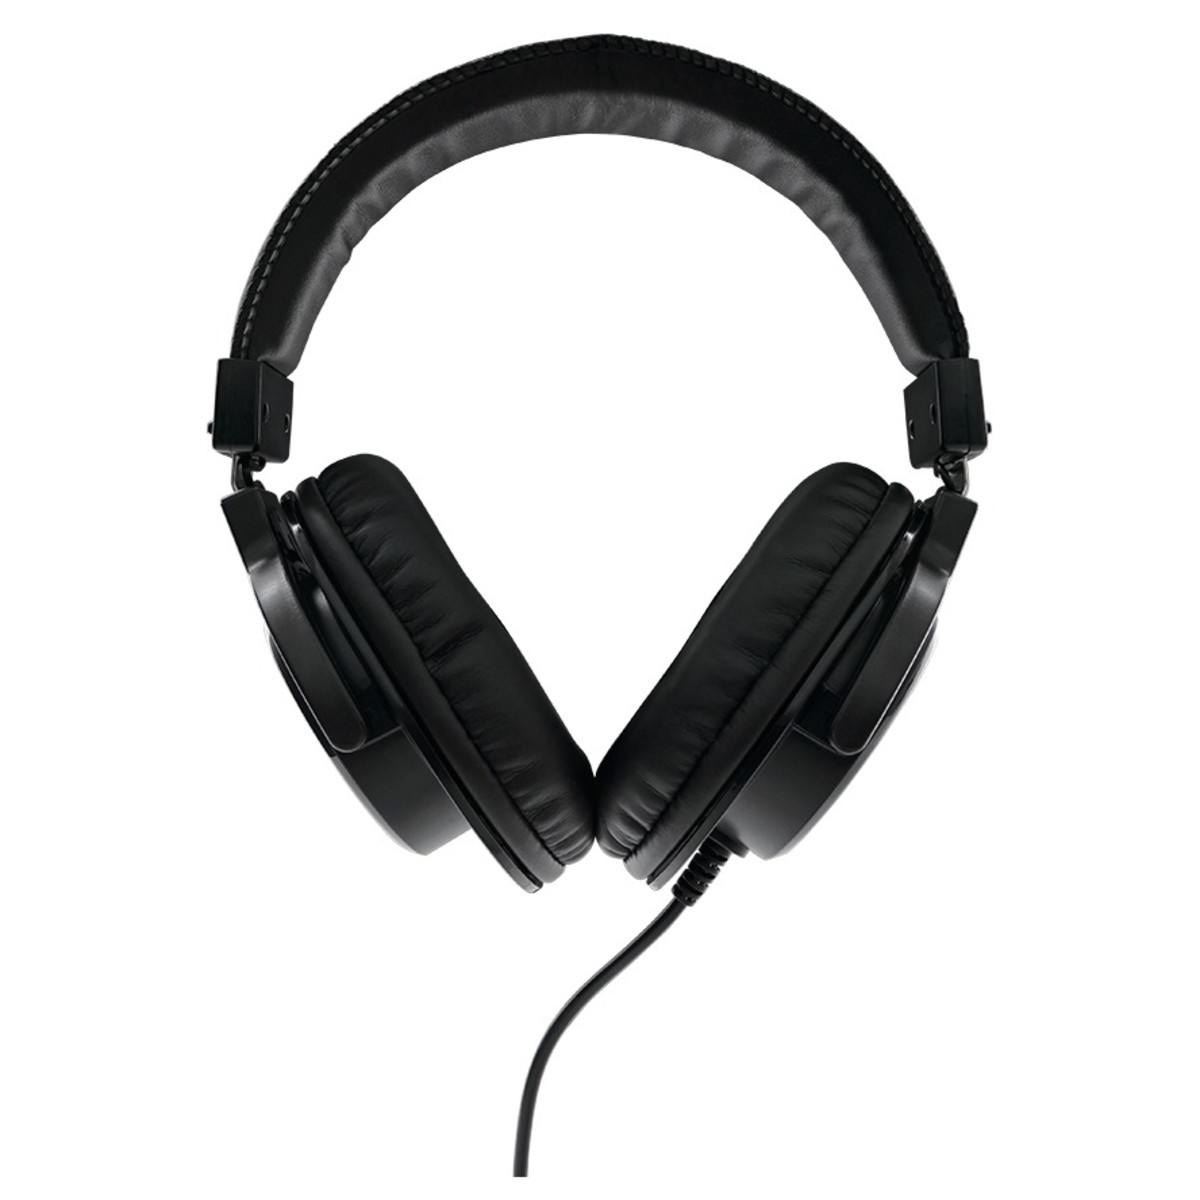 Edit Mackie MC-100 Professional Headphones - DY Pro Audio